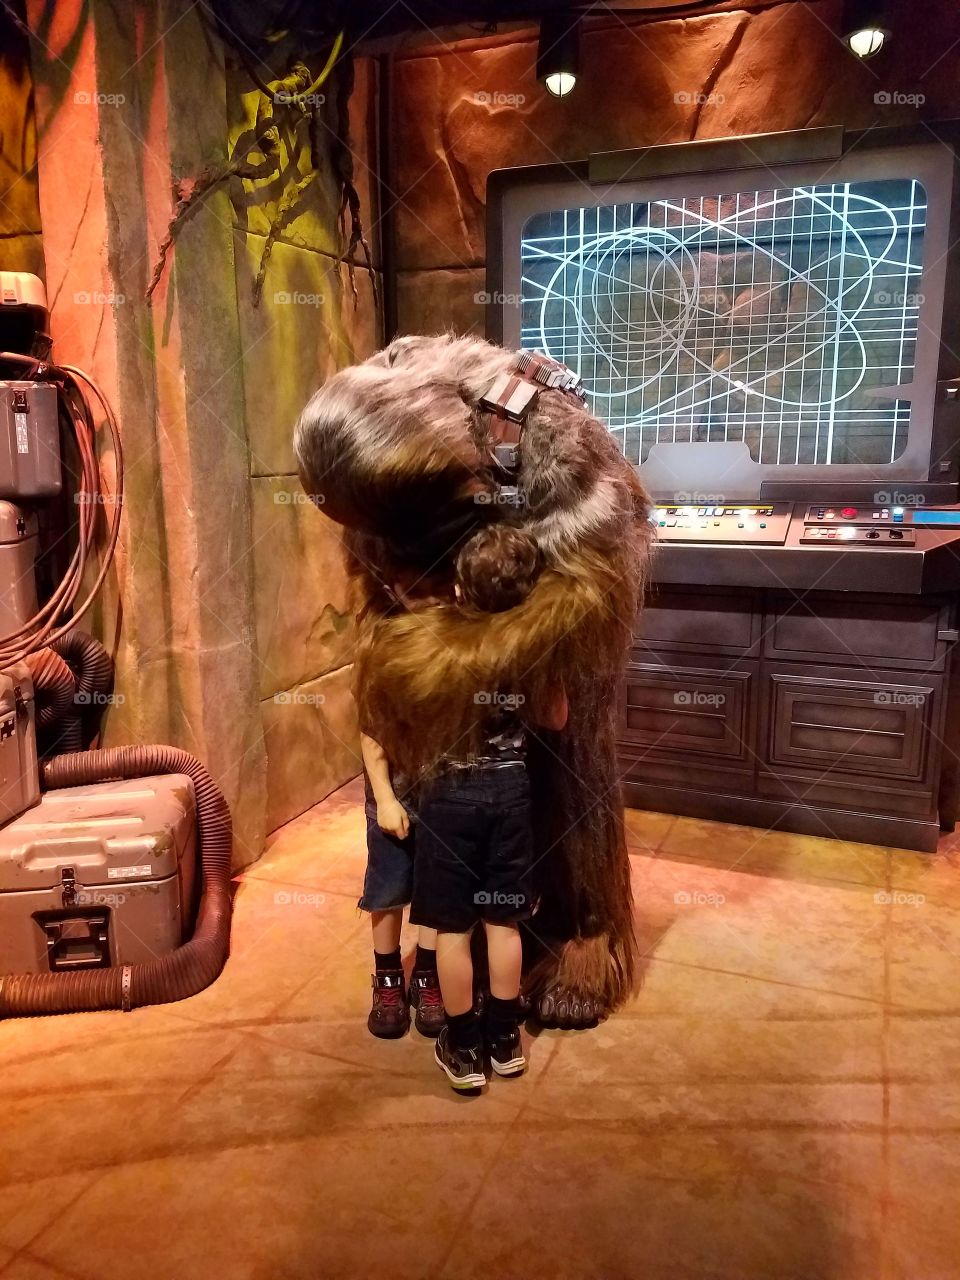 giving Chewbacca a hug